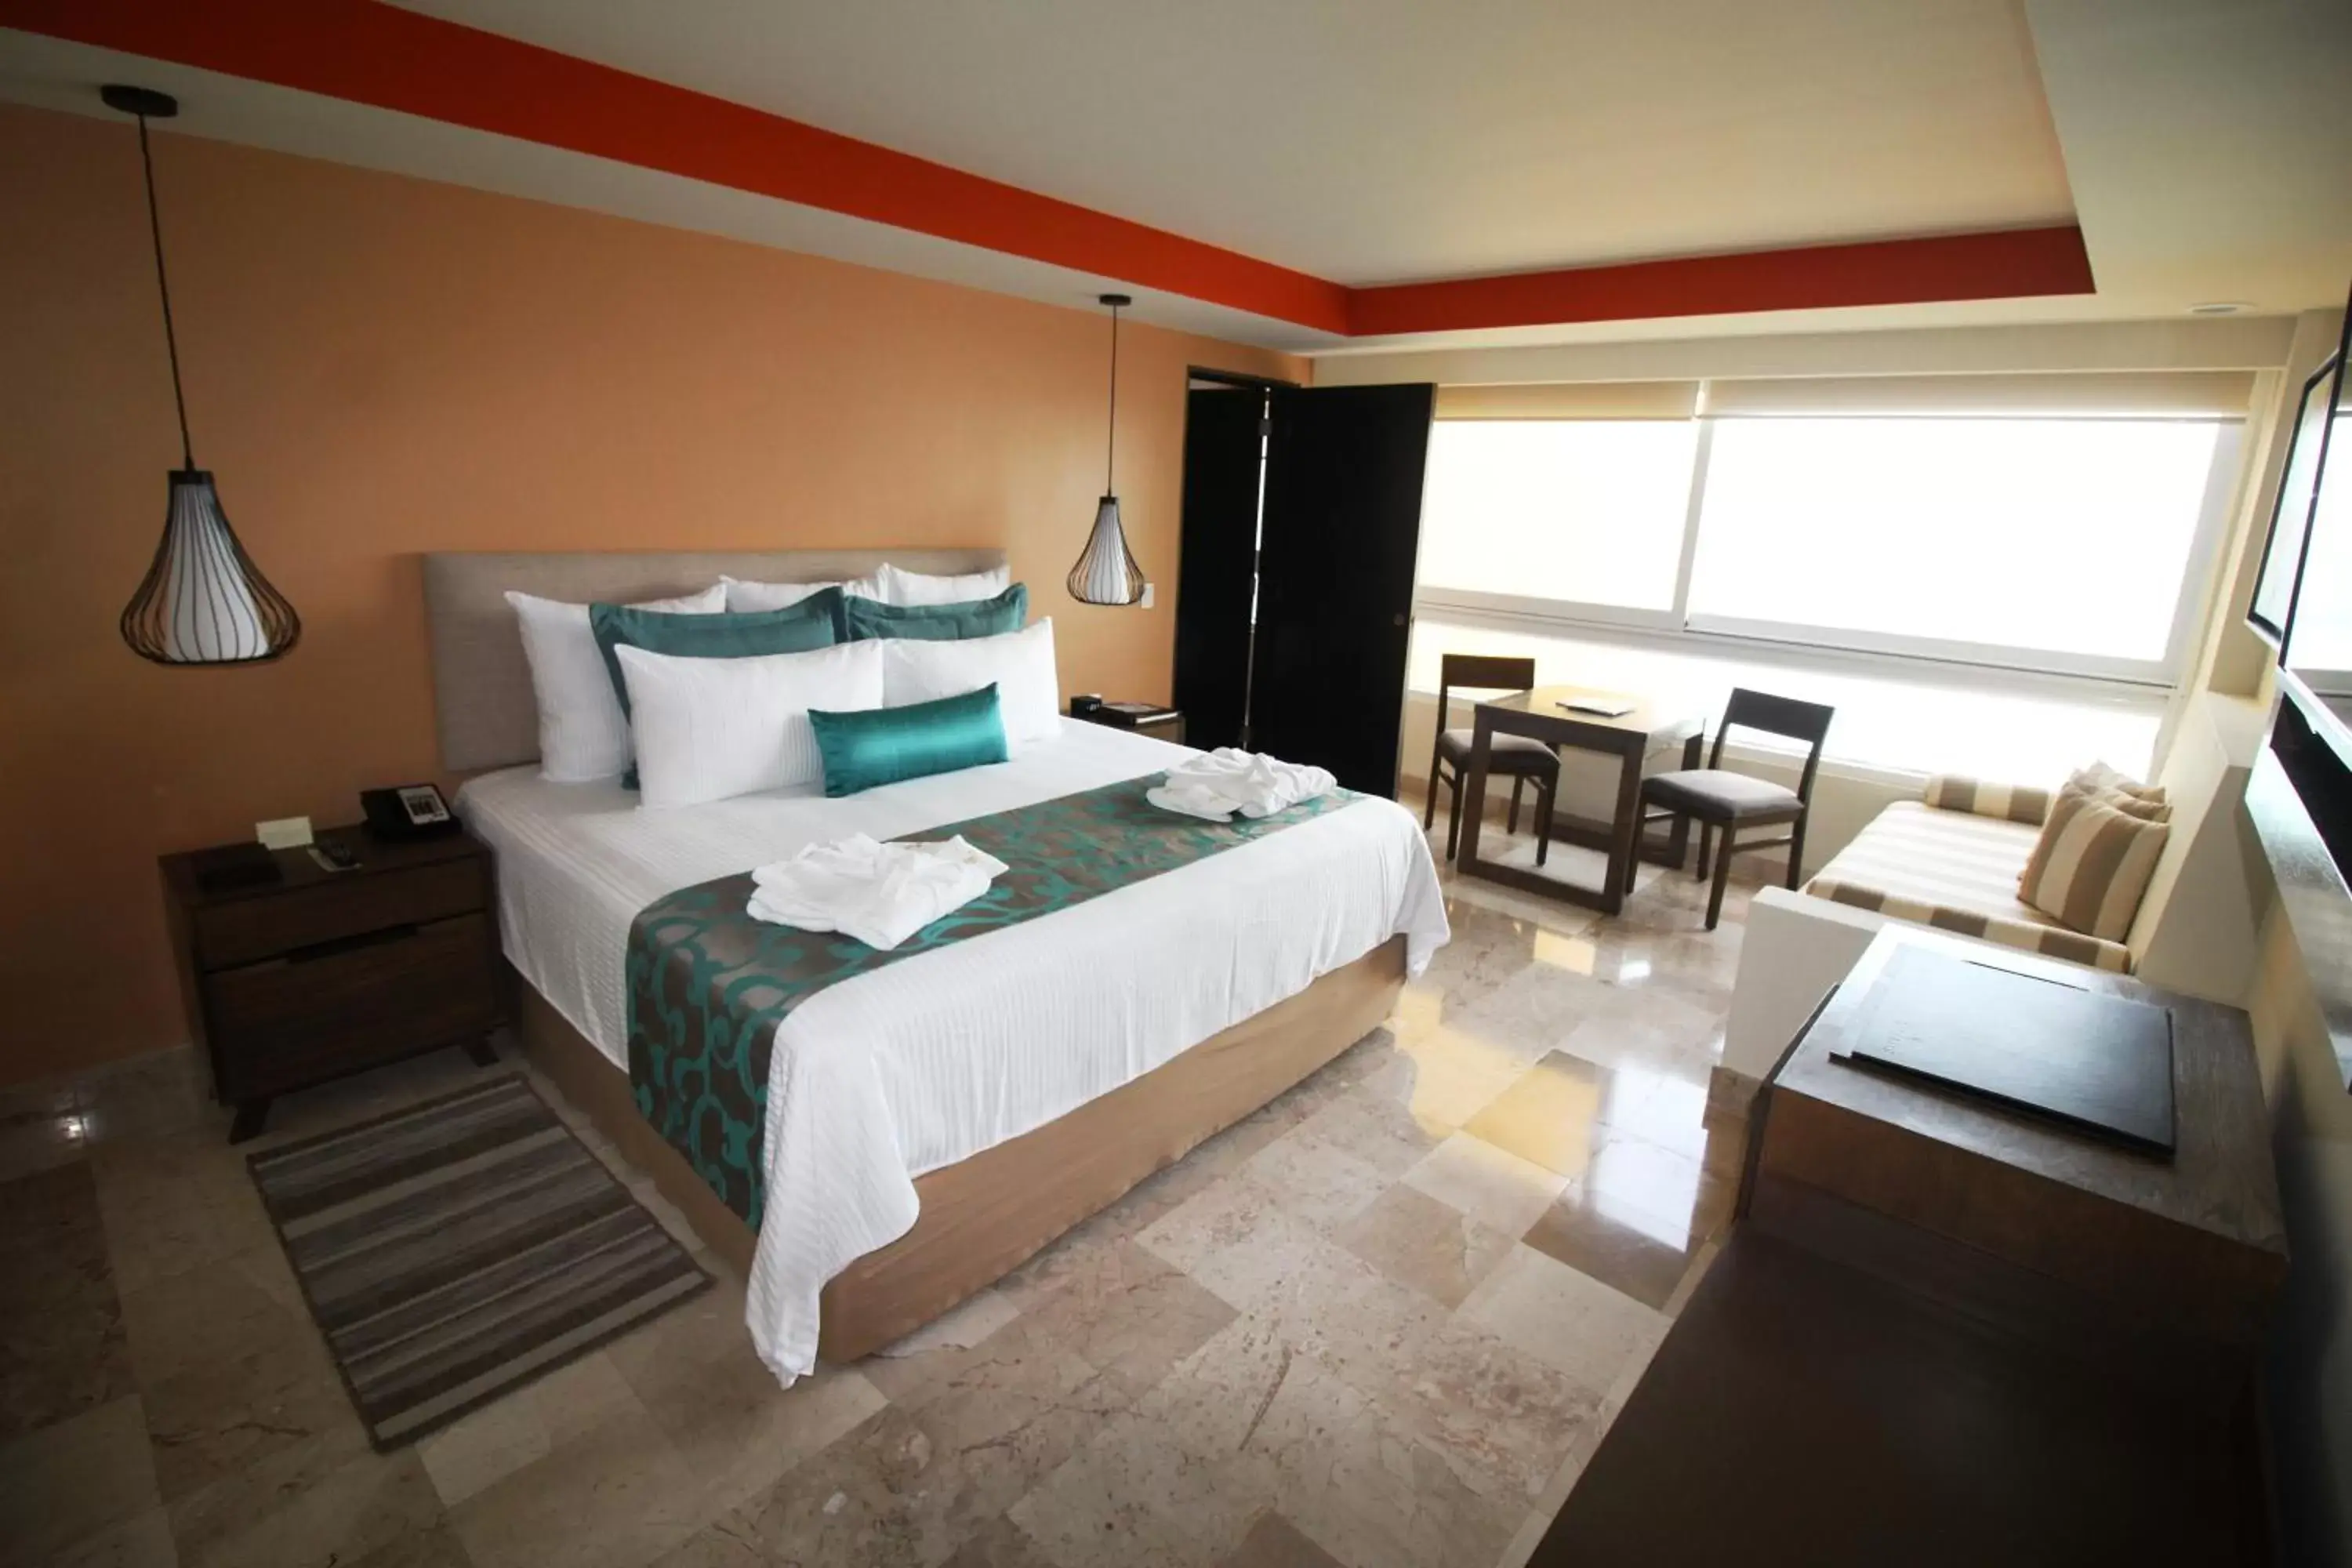 Bedroom in Dreams Sands Cancun Resort & Spa